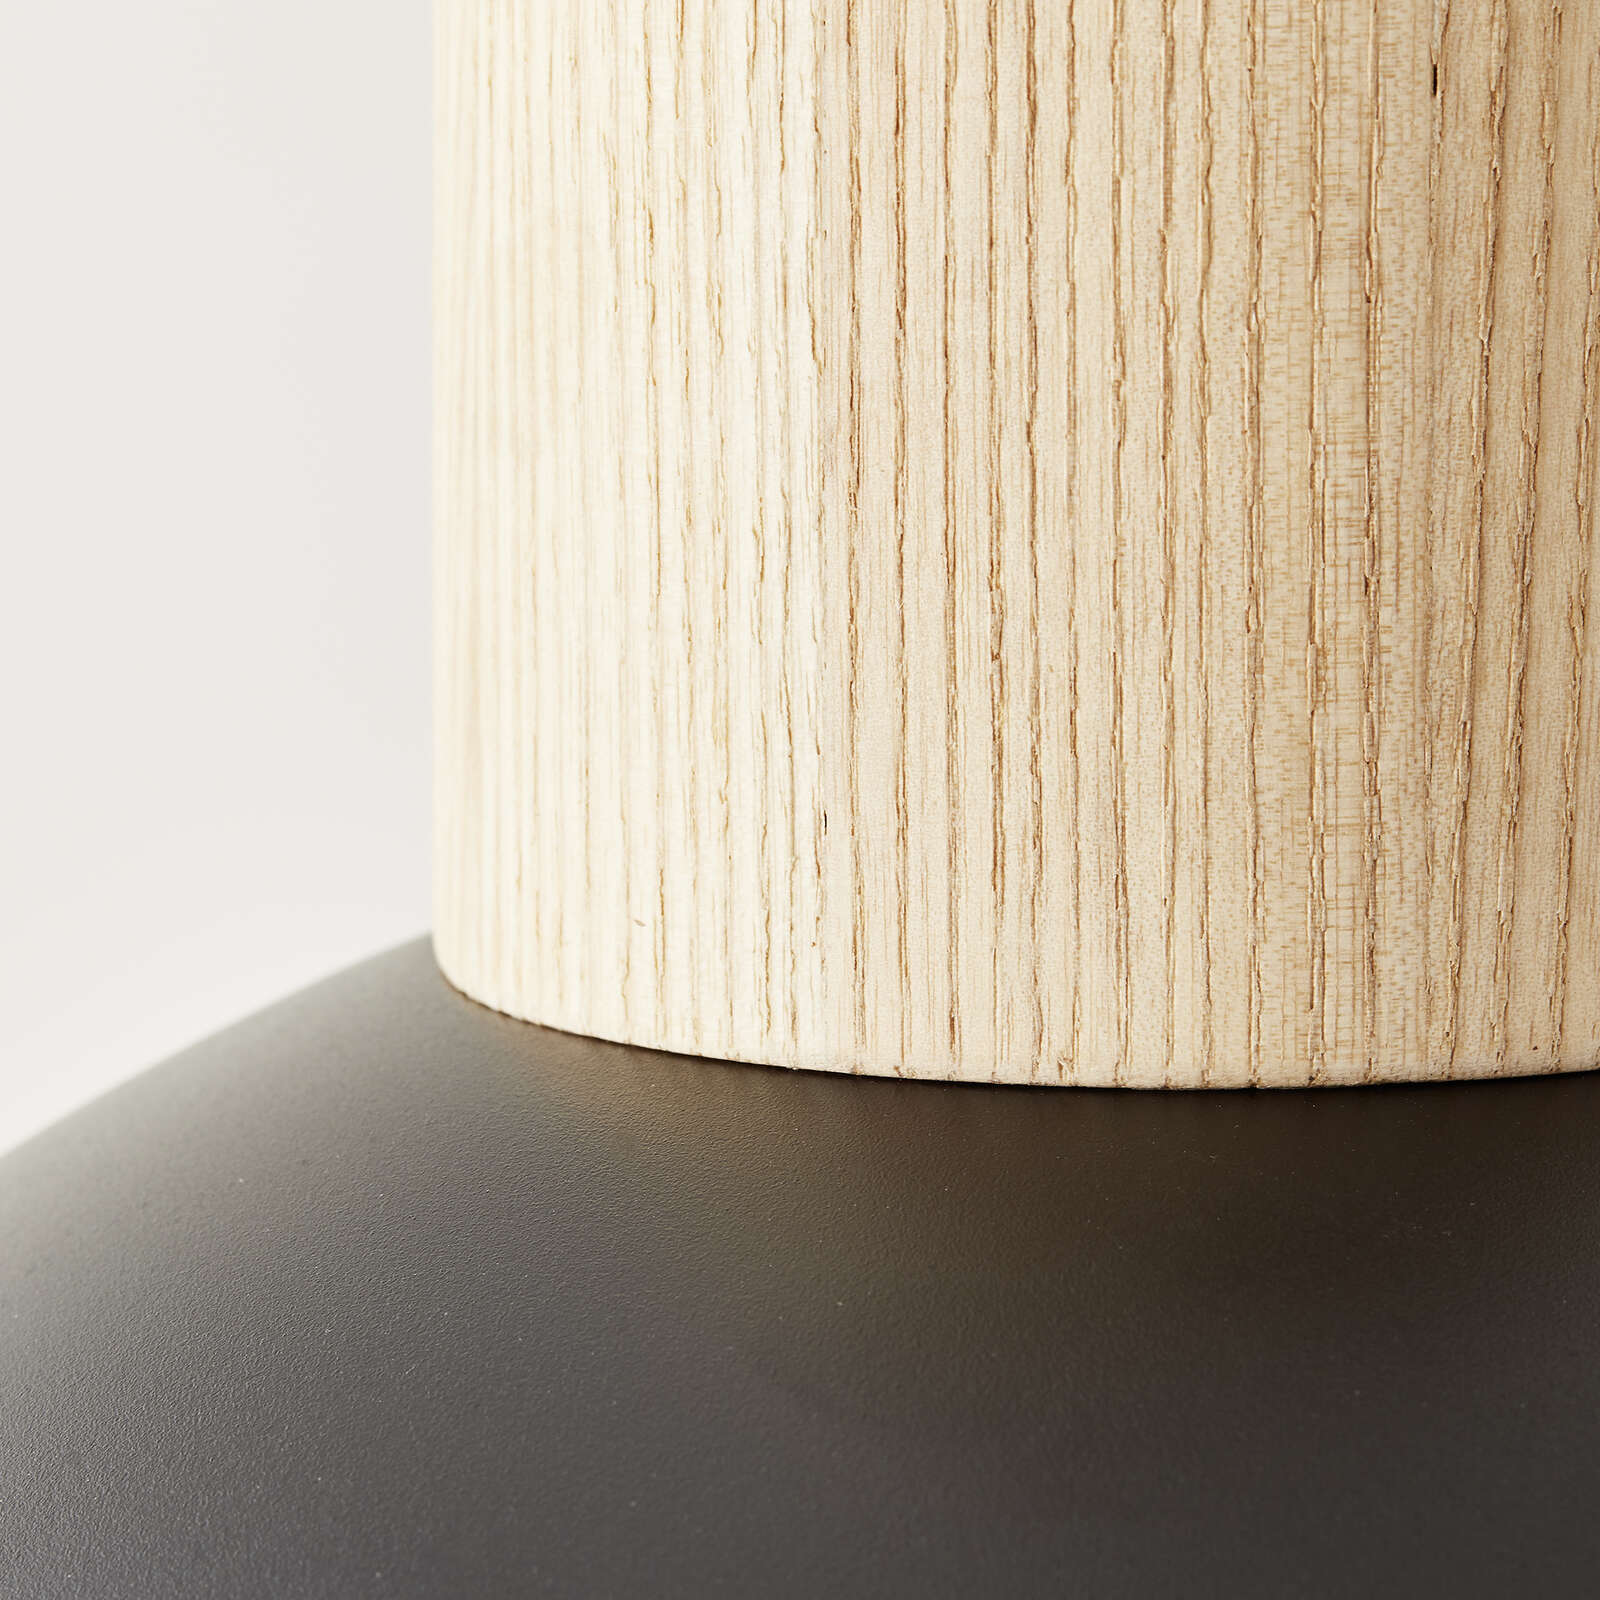             Wooden pendant light - Emil 6 - Brown
        